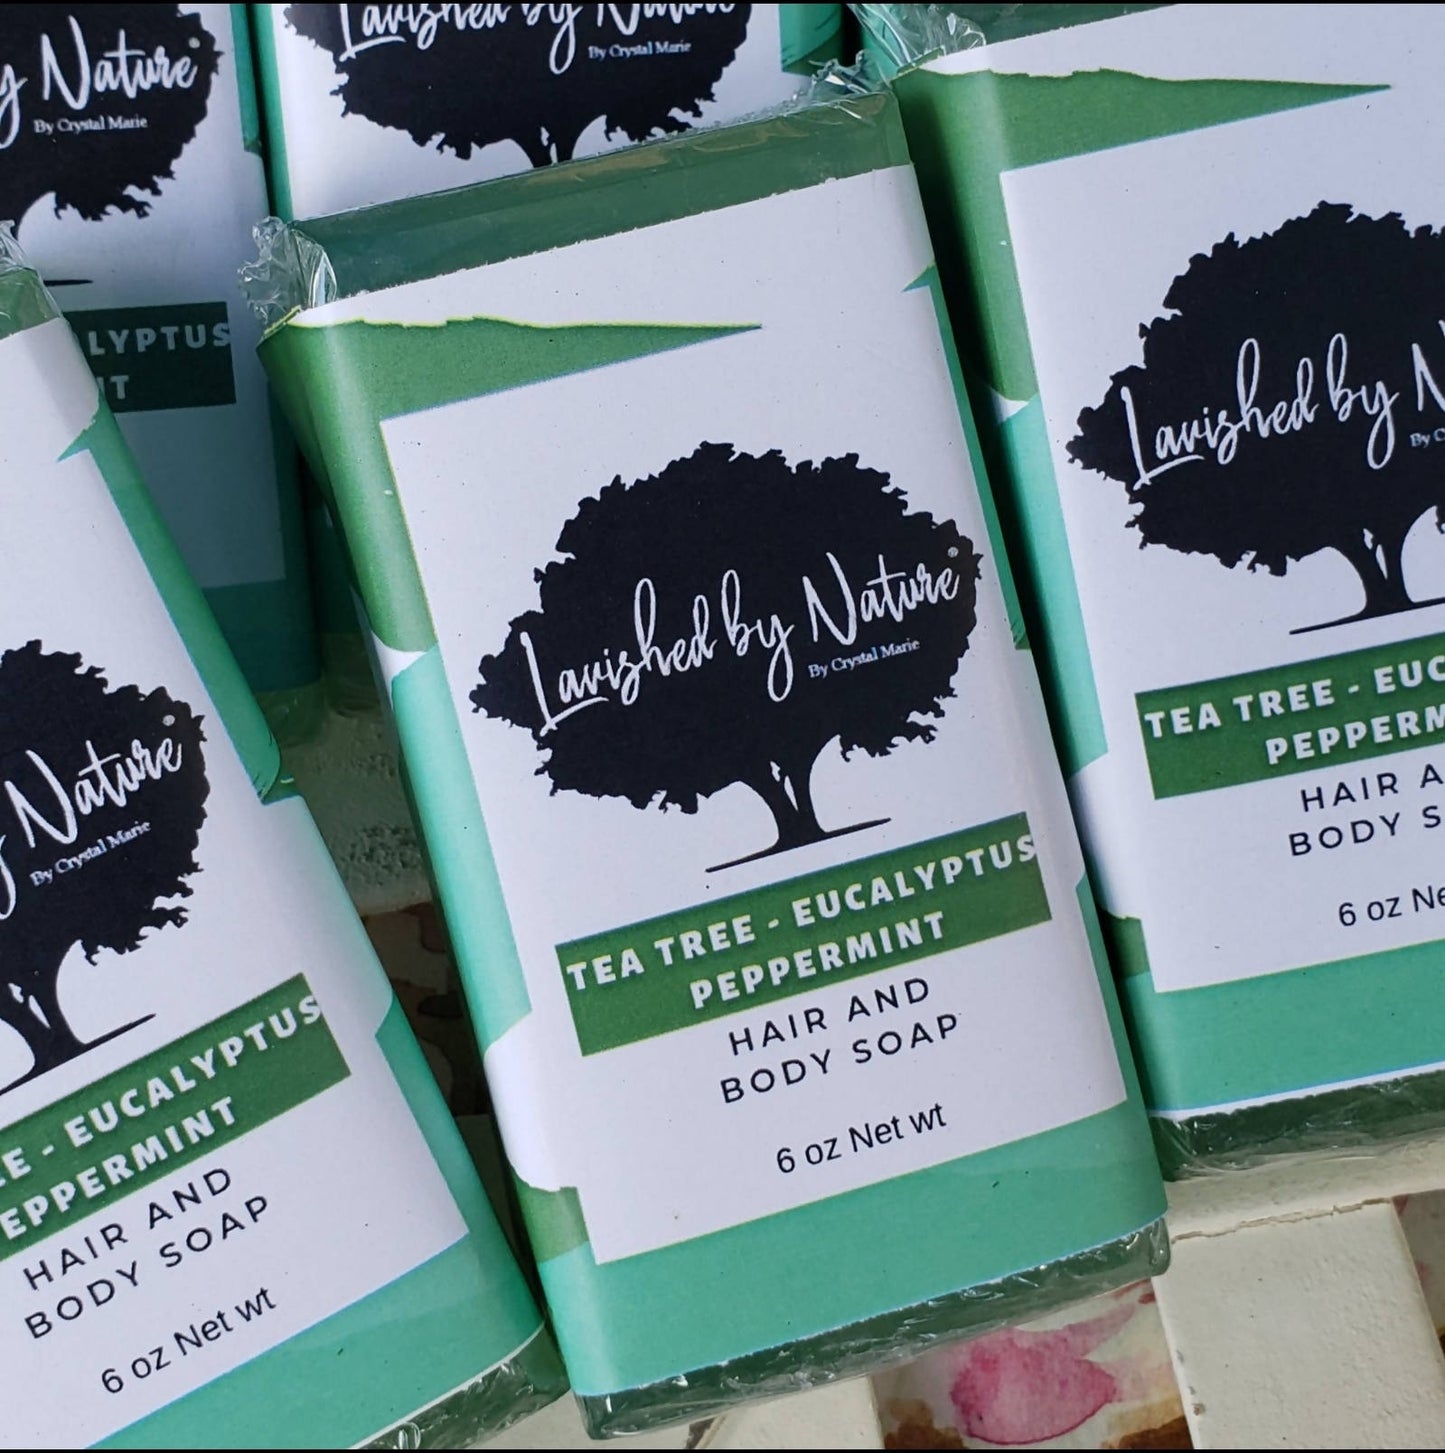 Tea Tree Eucalyptus Hair & Body Soap